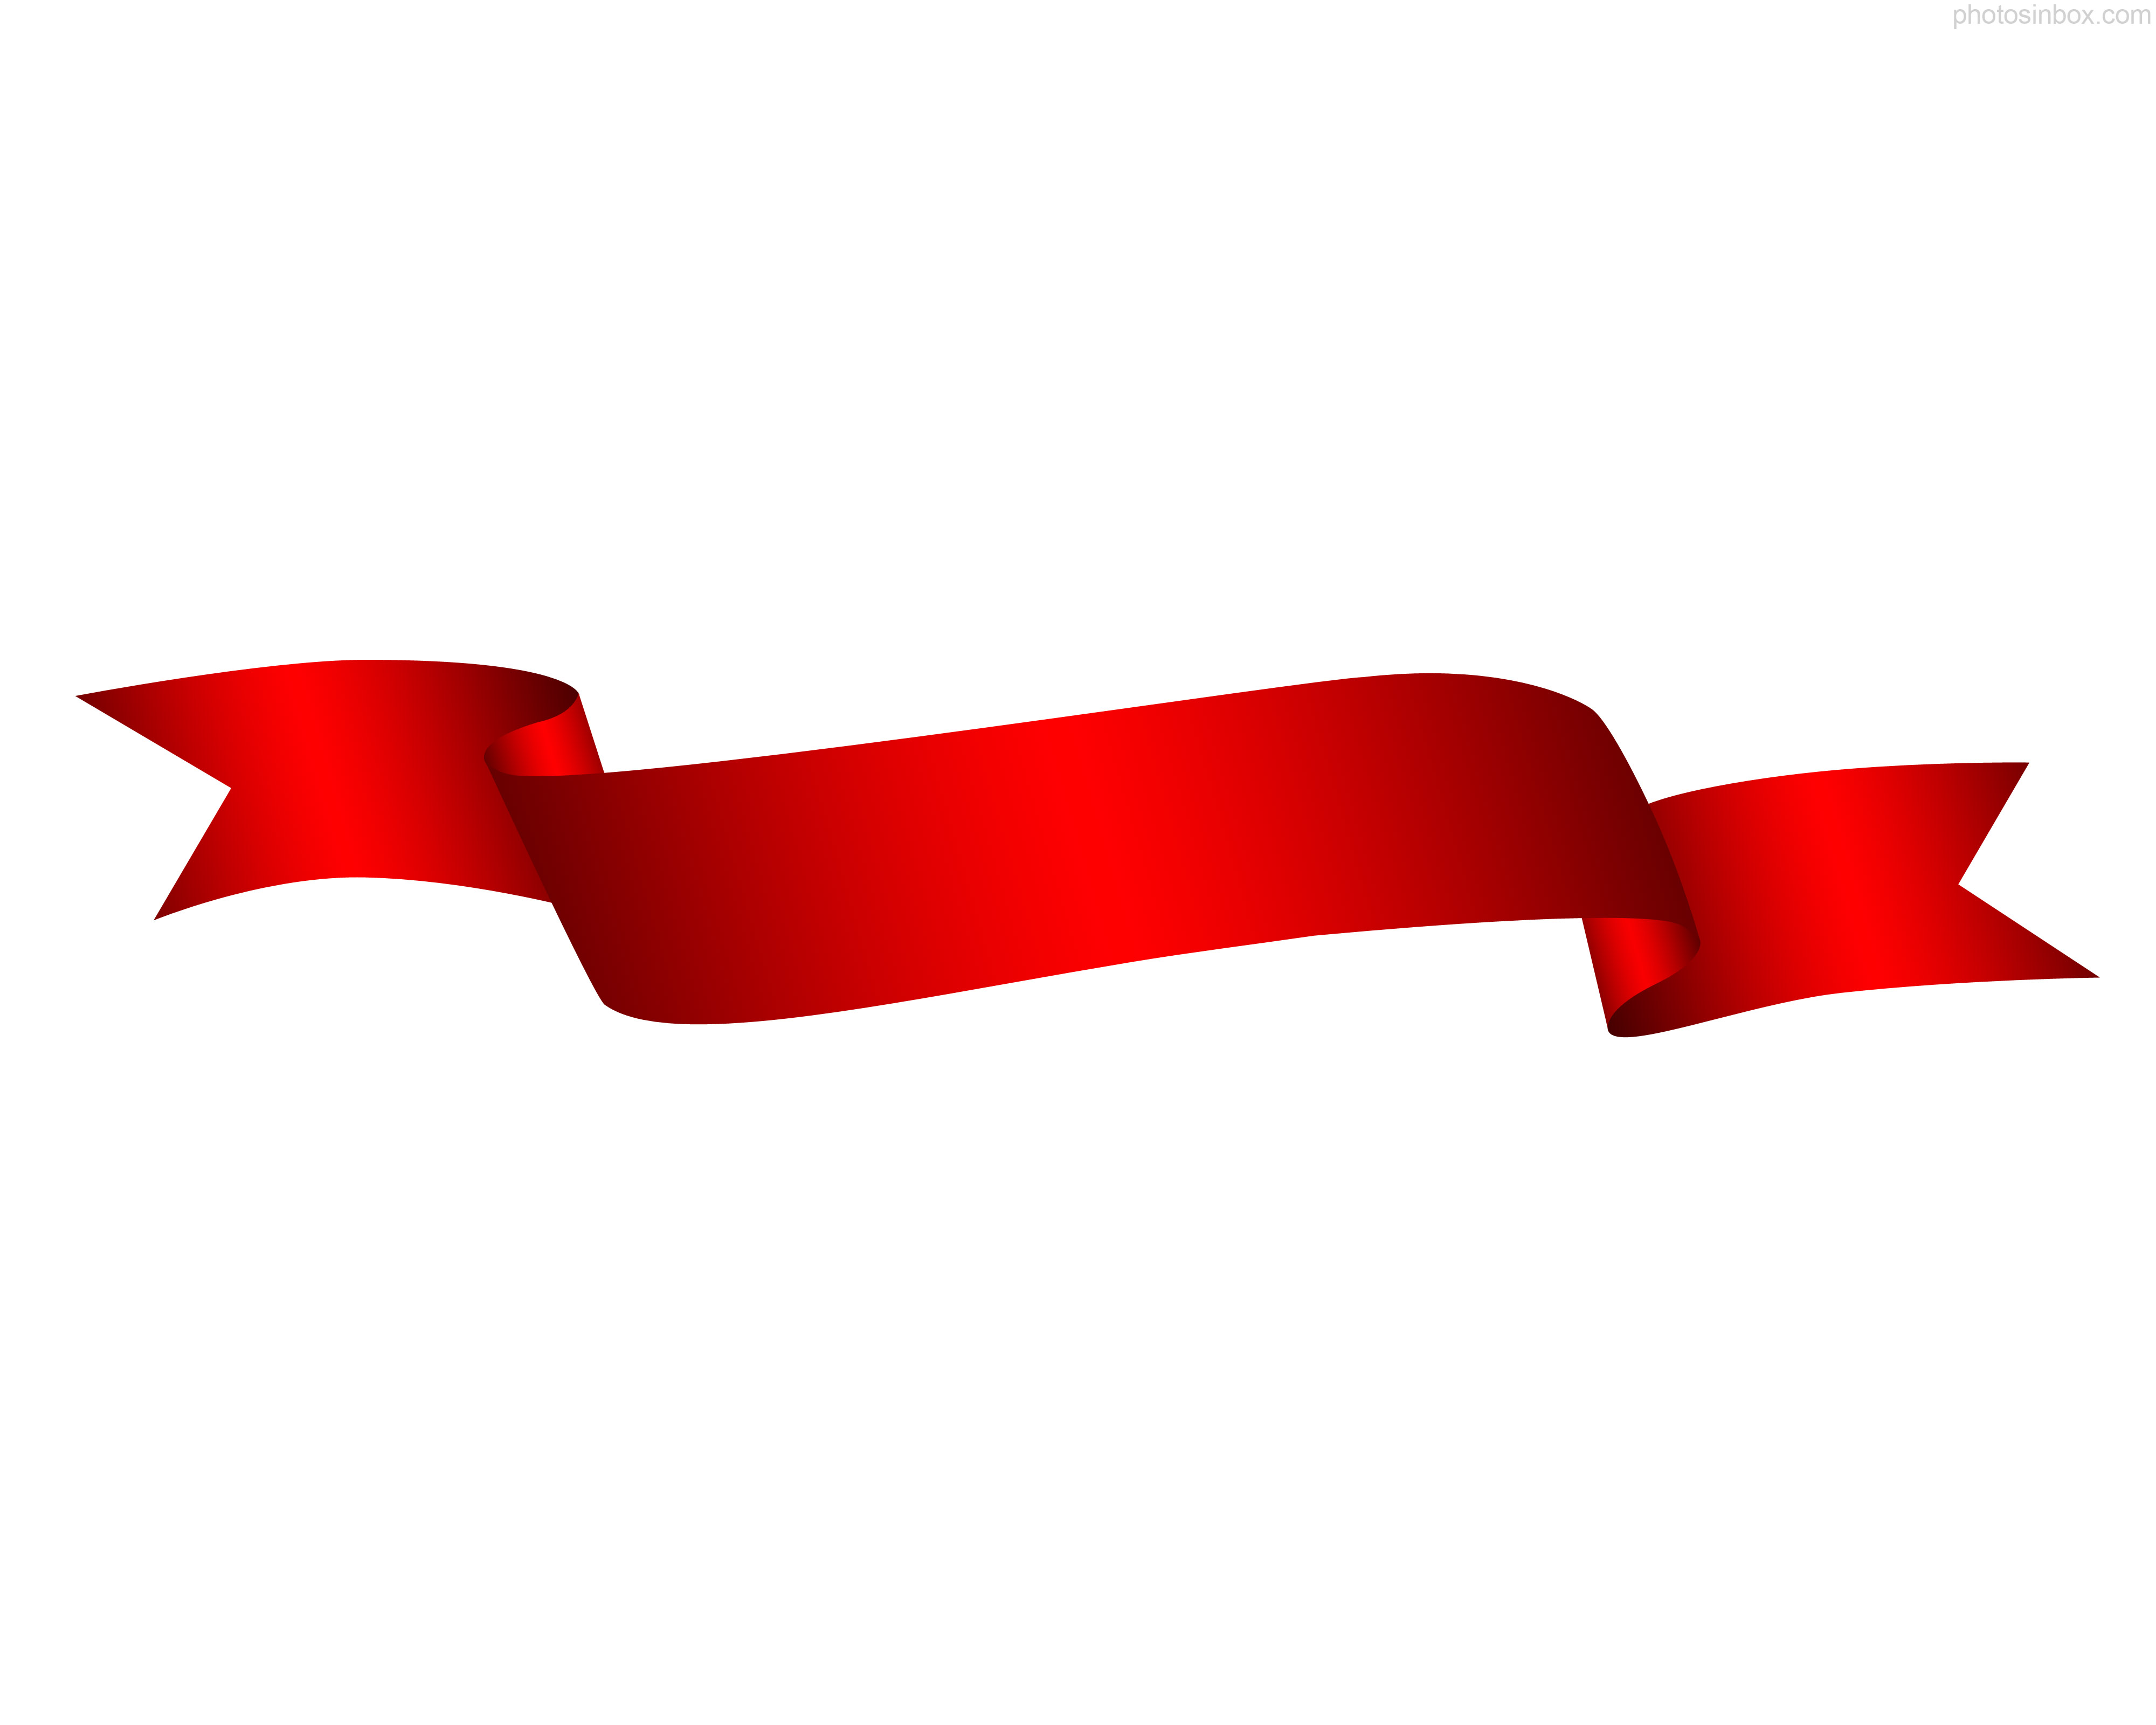 Red Ribbon Photosinbox - Red Ribbon Clip Art